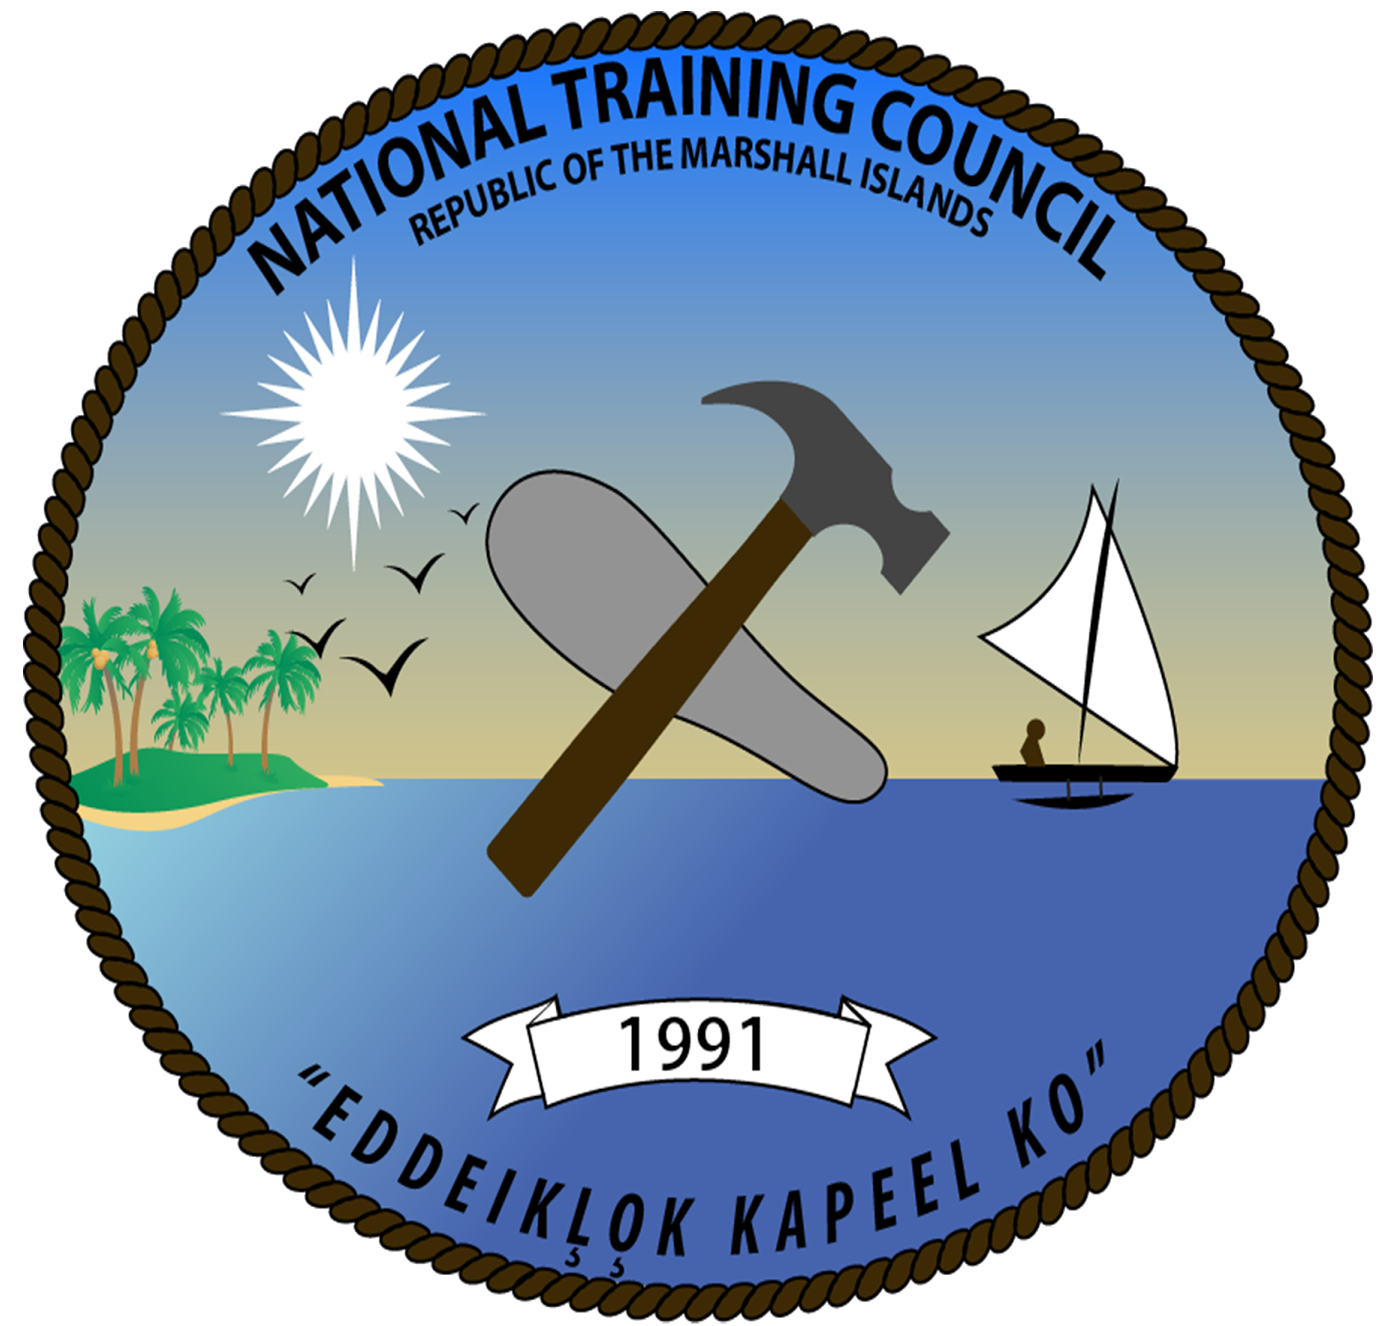 RMI National Training Council